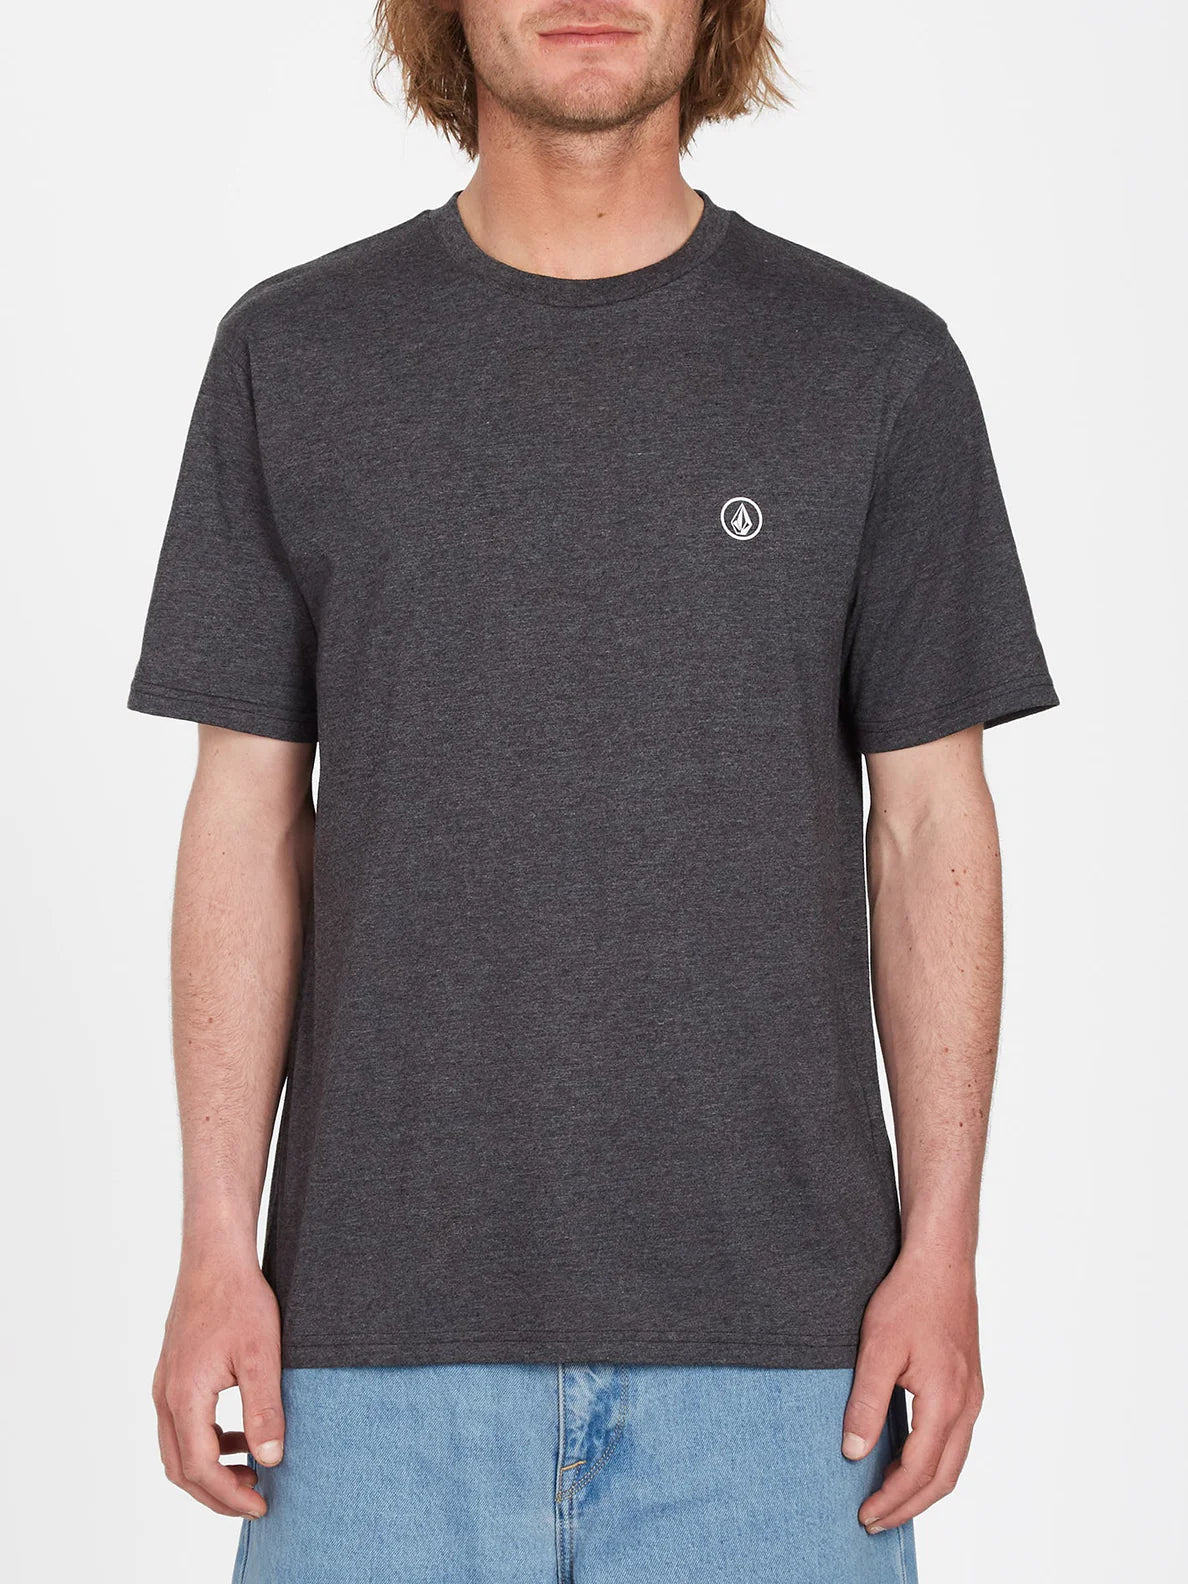 Volcom Circle Blanks Heather Black T-Shirt | Herren-T-Shirts | Kurzarm-T-Shirts für Herren | Meistverkaufte Produkte | Neue Produkte | Neueste Produkte | Sammlung_Zalando | Volcom-Shop | surfdevils.com